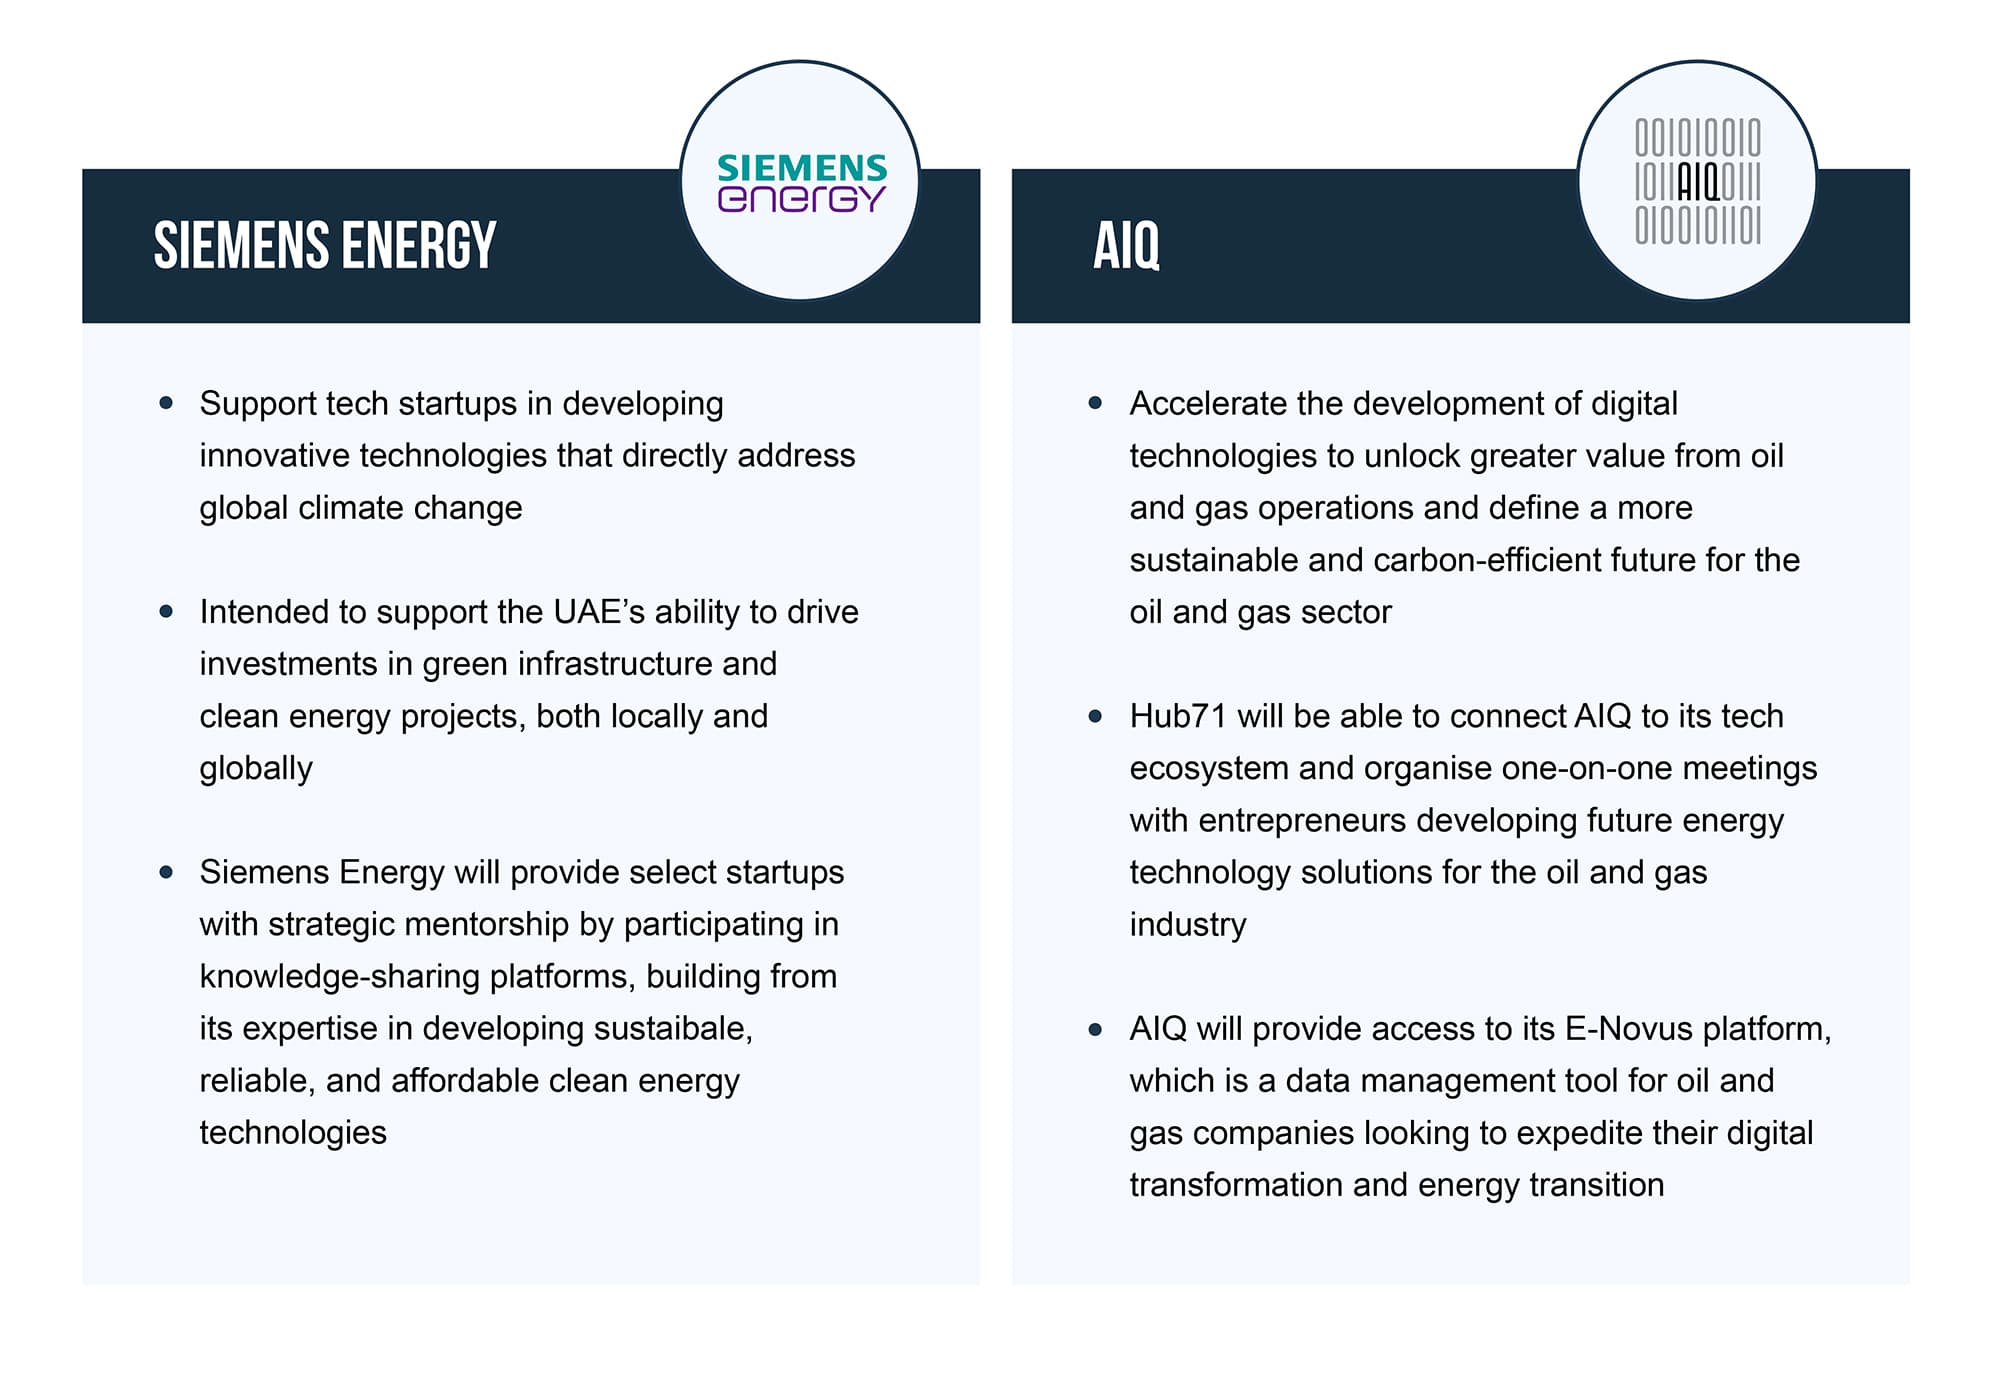 HUB71 Partnerships with Siemens Energy & AIQ